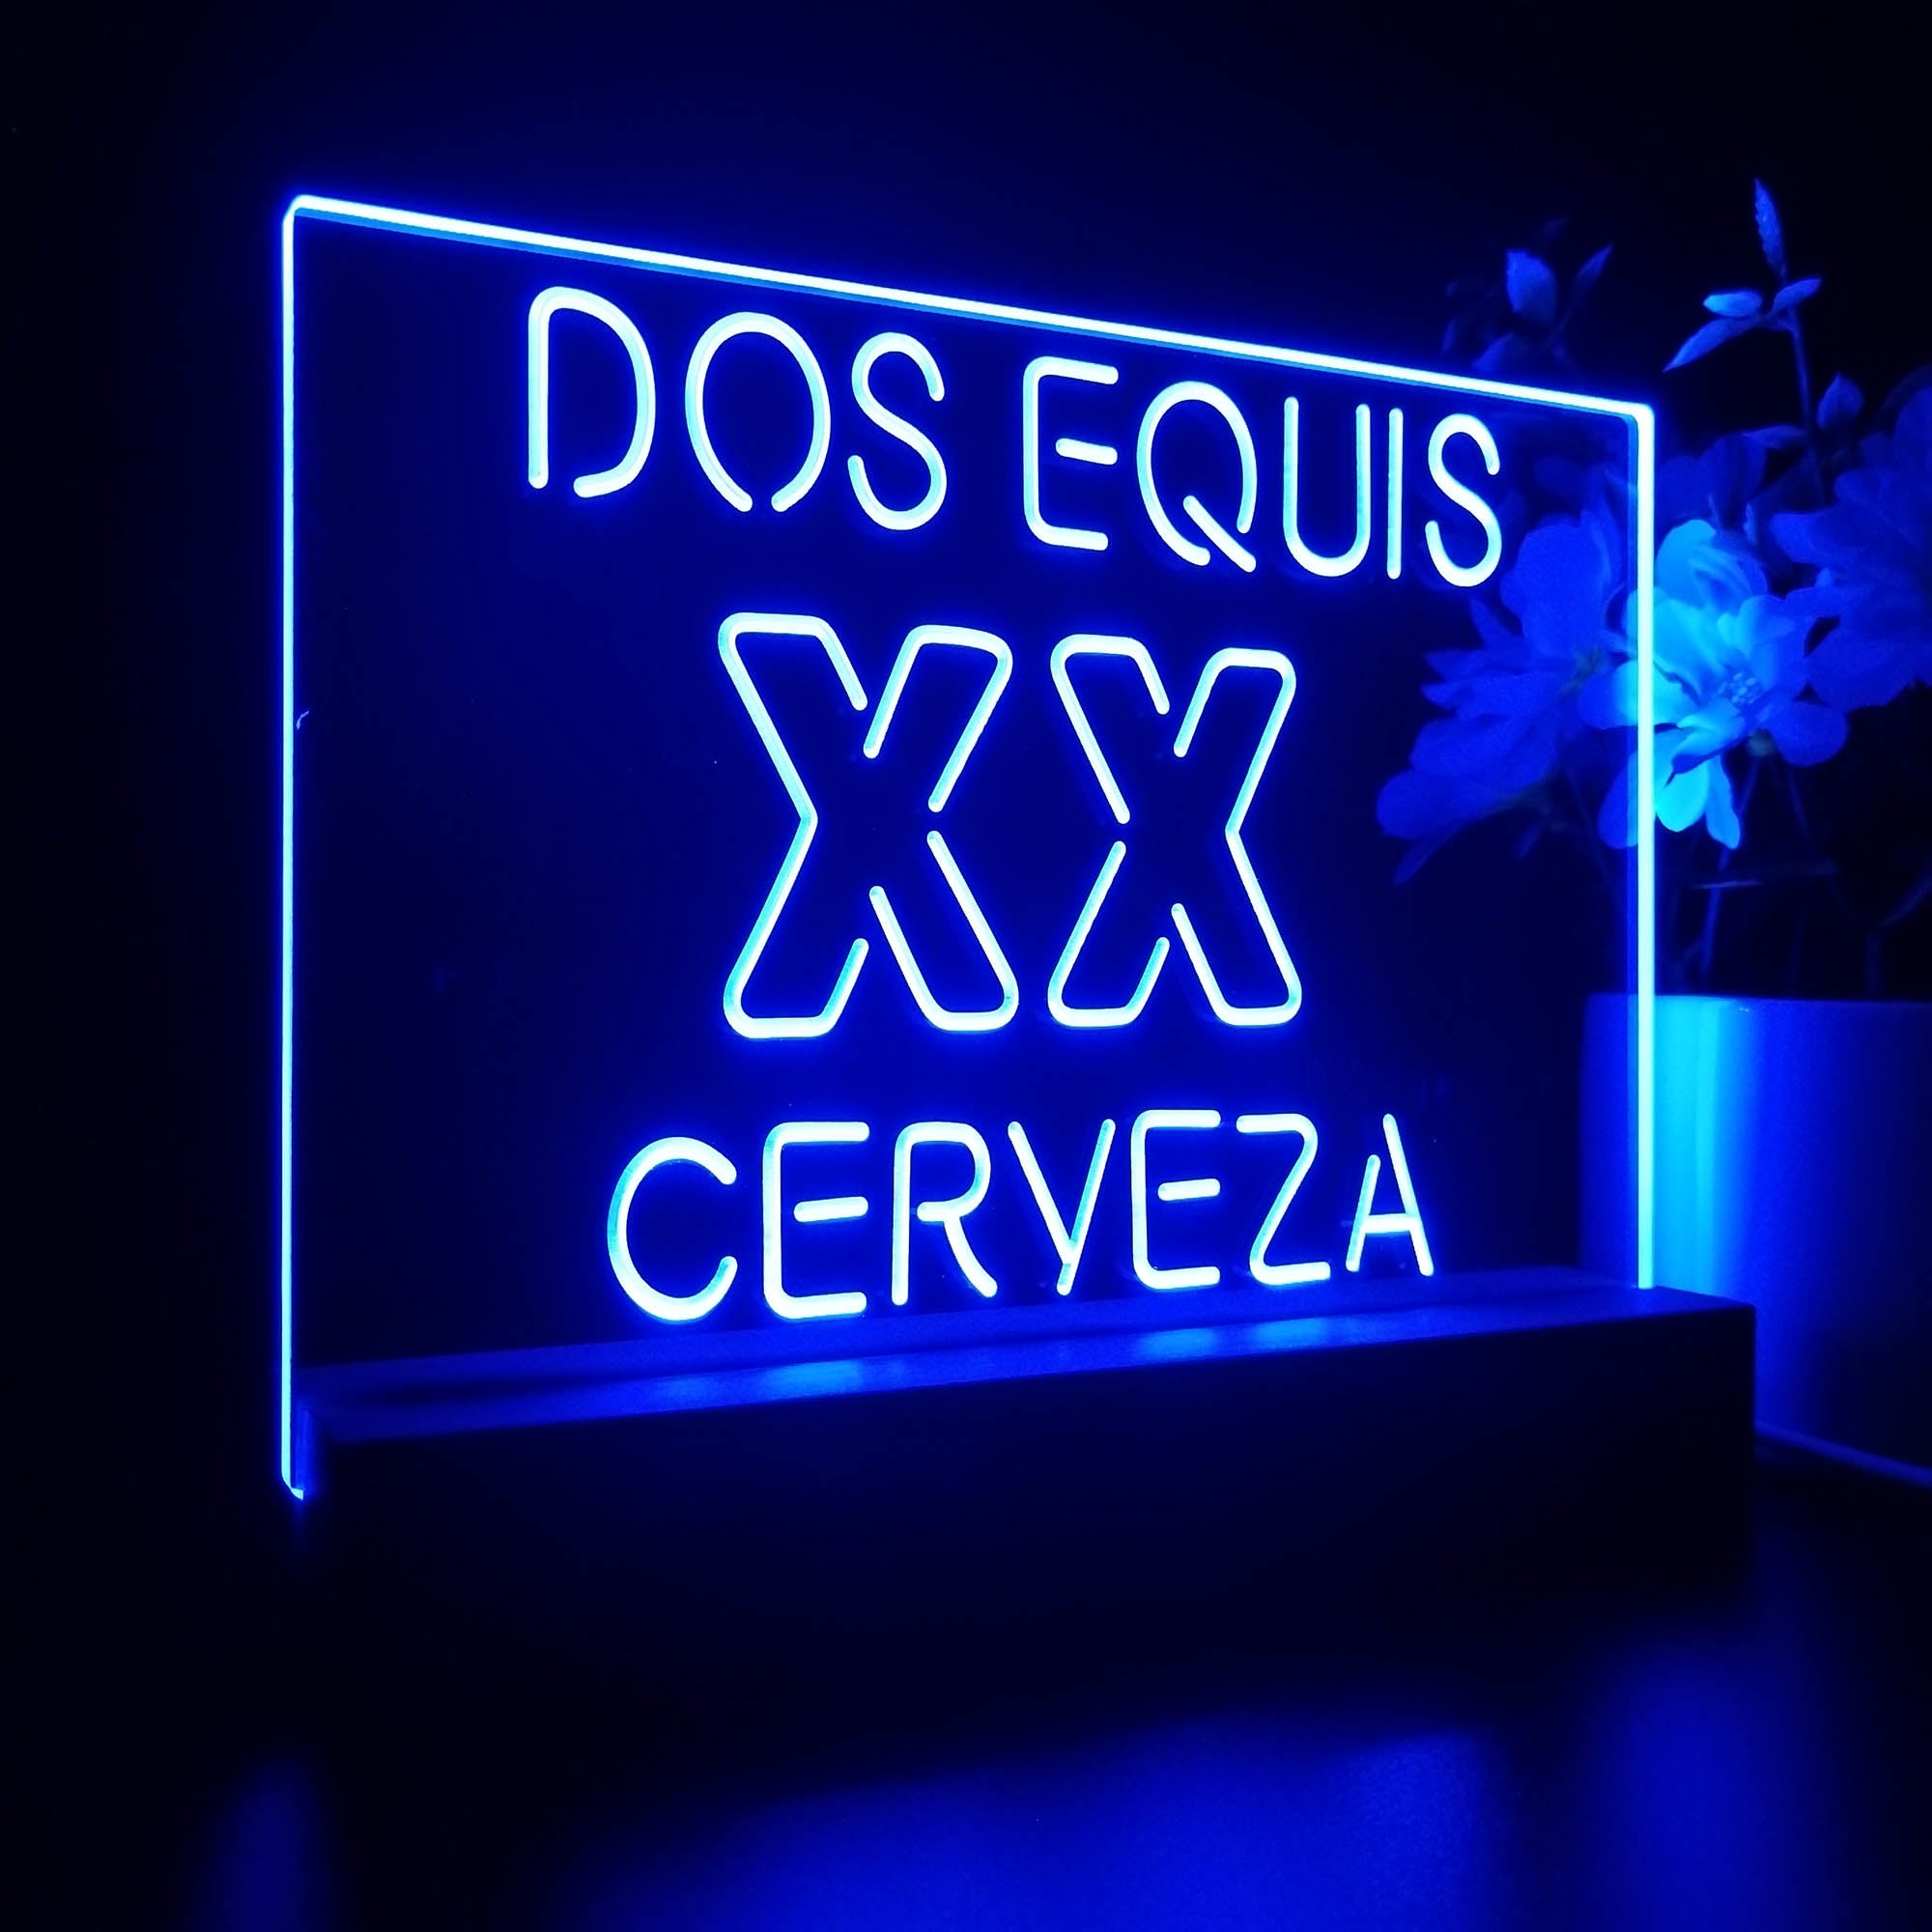 Dos Equis XX Cerveza Night Light 3D Illusion Lamp Home Bar Decor